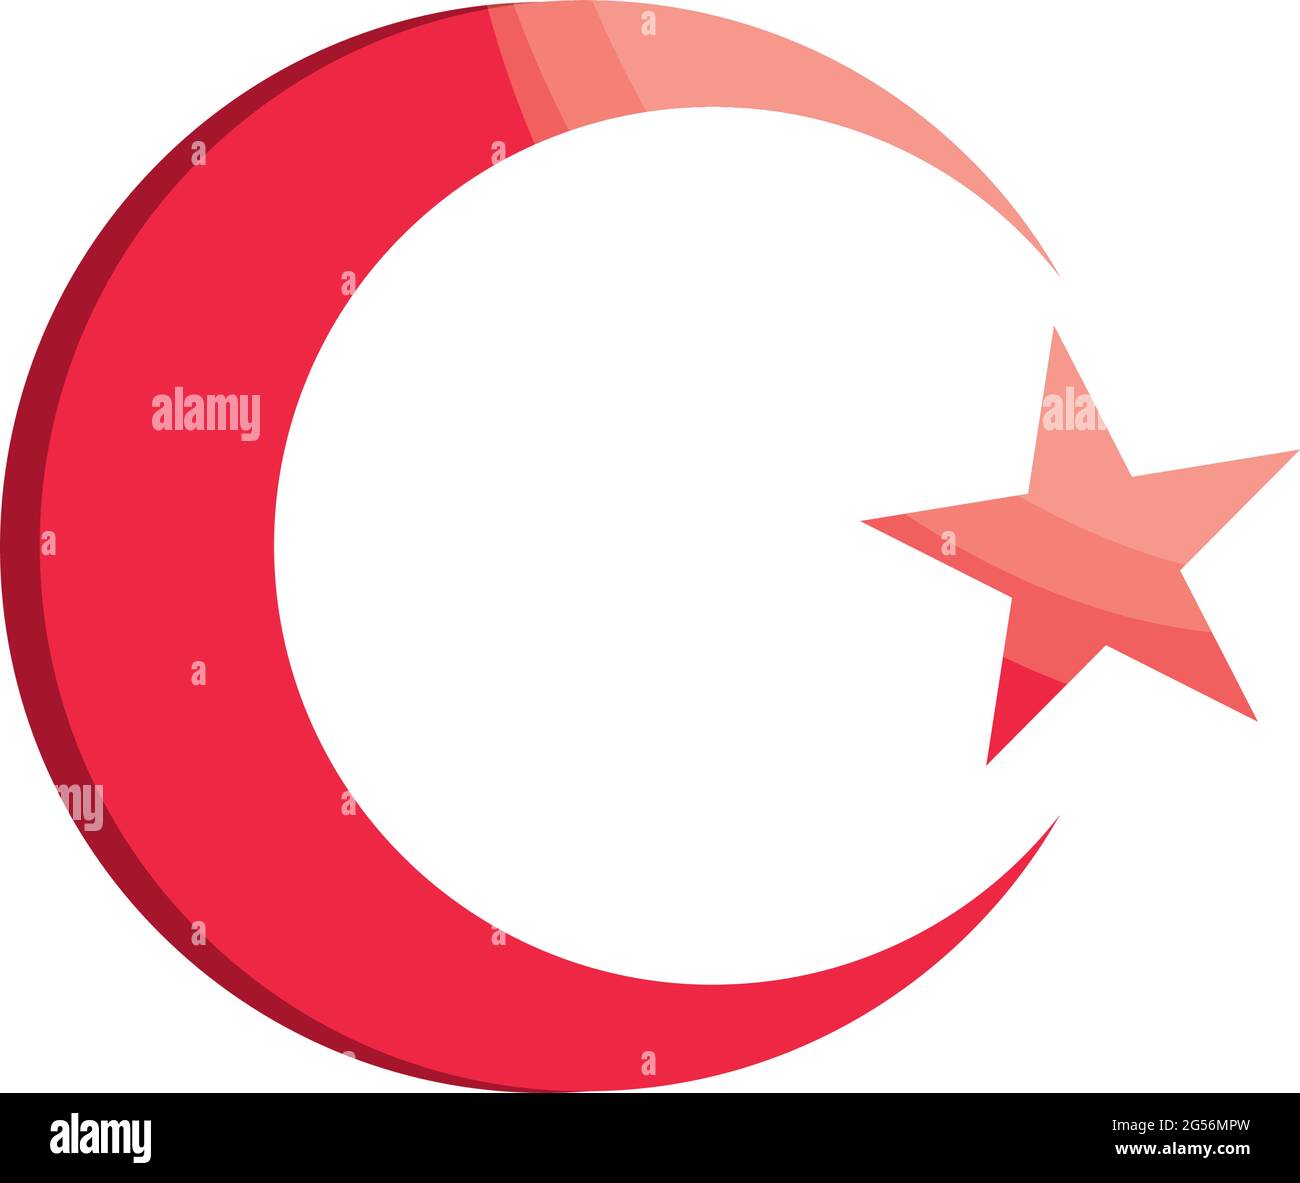 turkish flag moon and star Stock Vector